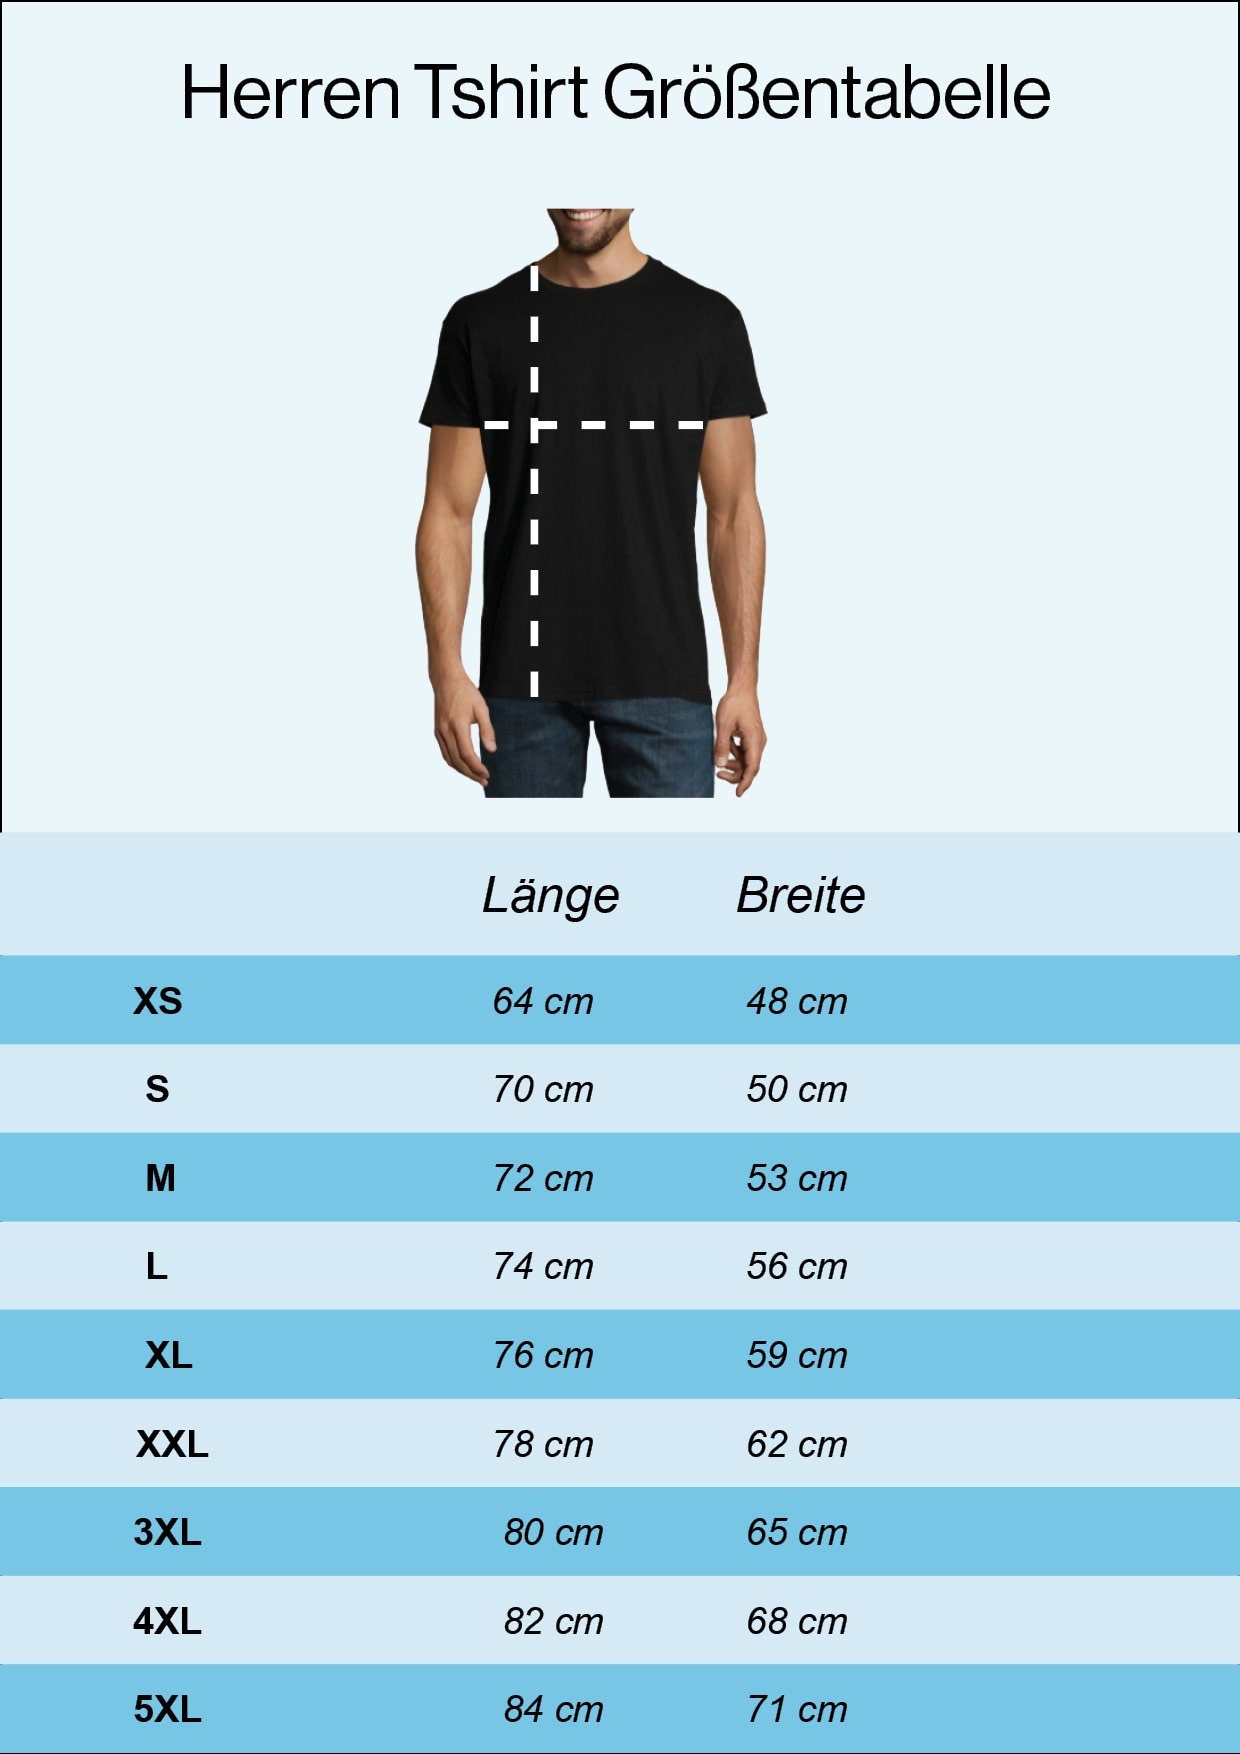 Youth Designz T-Shirt Modell Bazinga Frontprint Mit T-Shirt trendigem Grau Herren